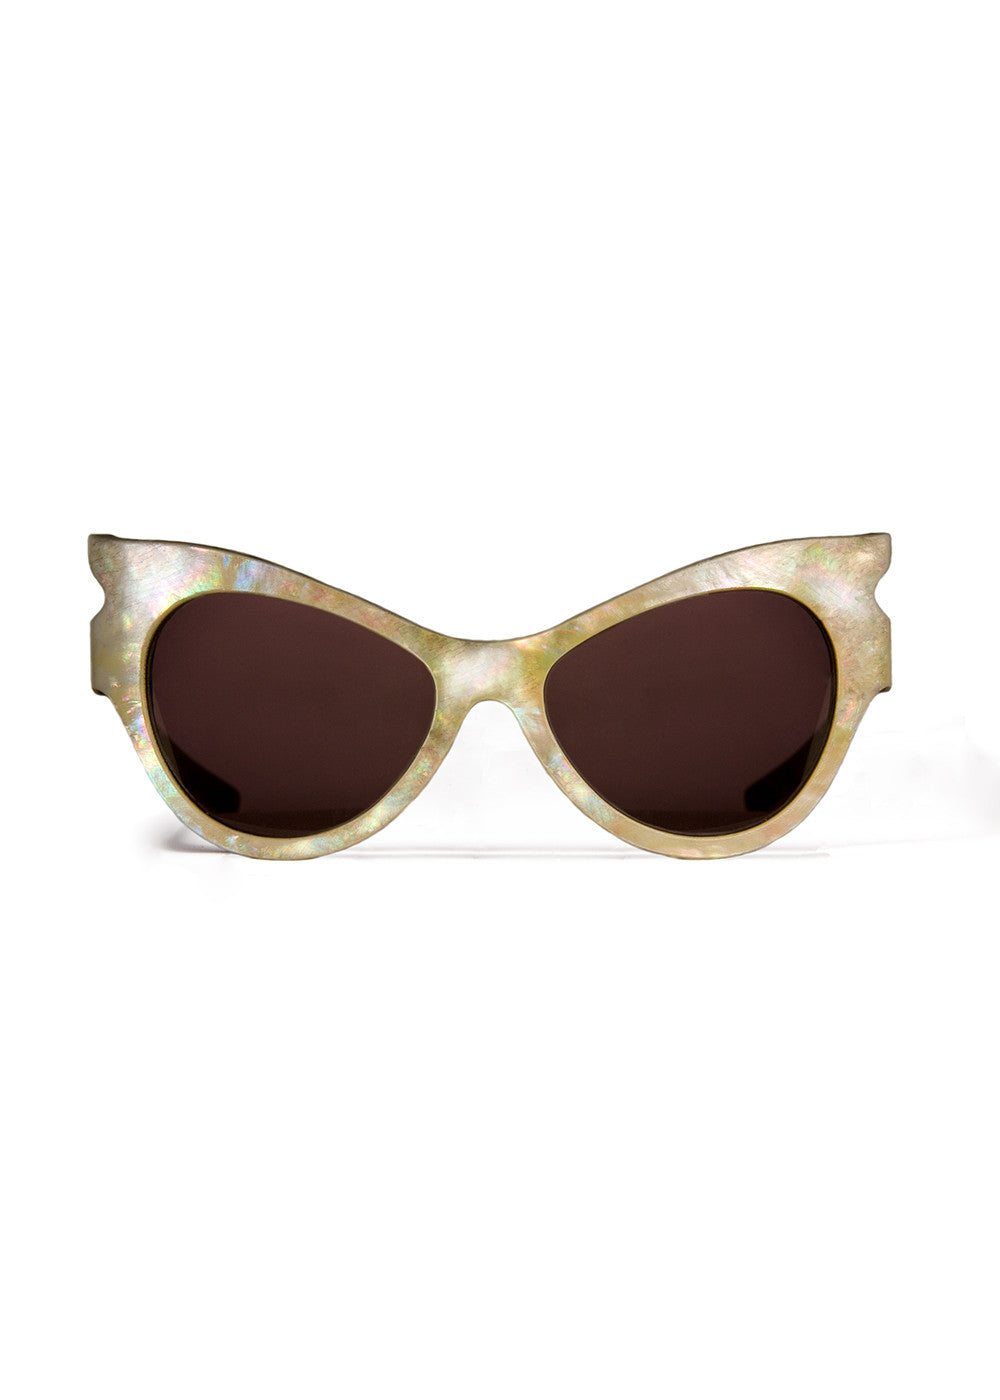 Superlativa® sunglasses model King Eider